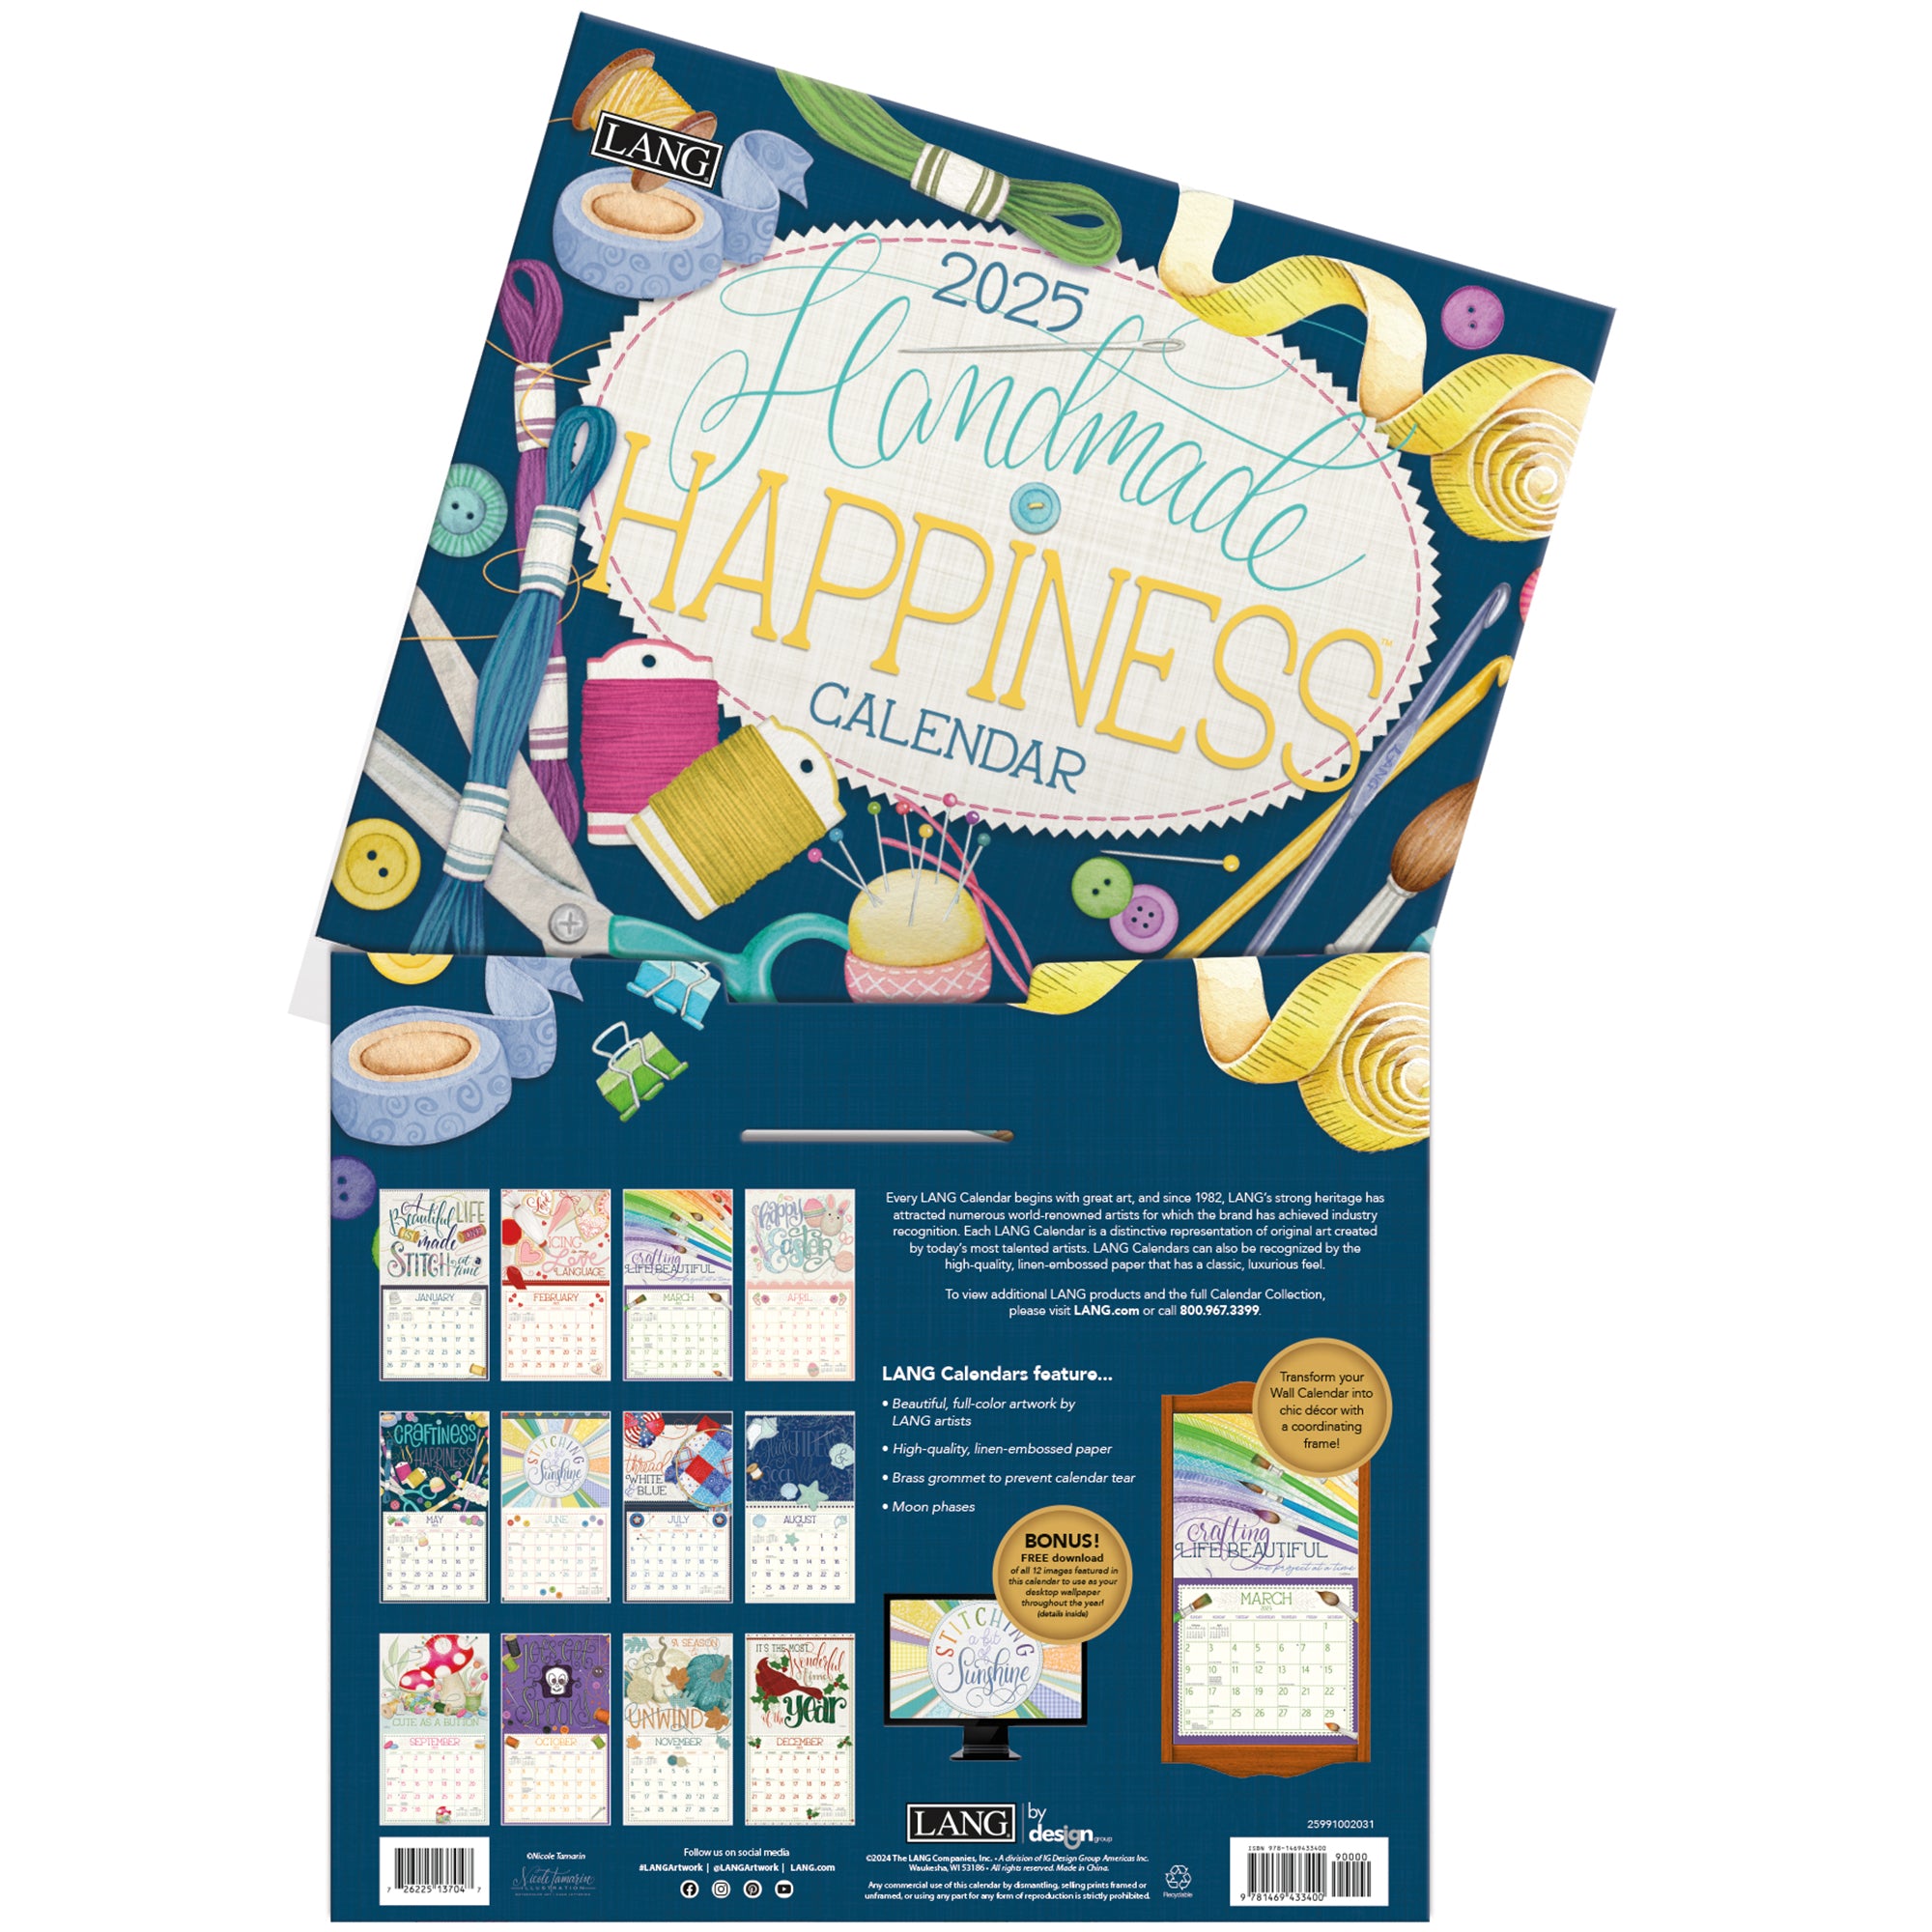 2025 Handmade Happiness By Nicole Tamarin - LANG Deluxe Wall Calendar